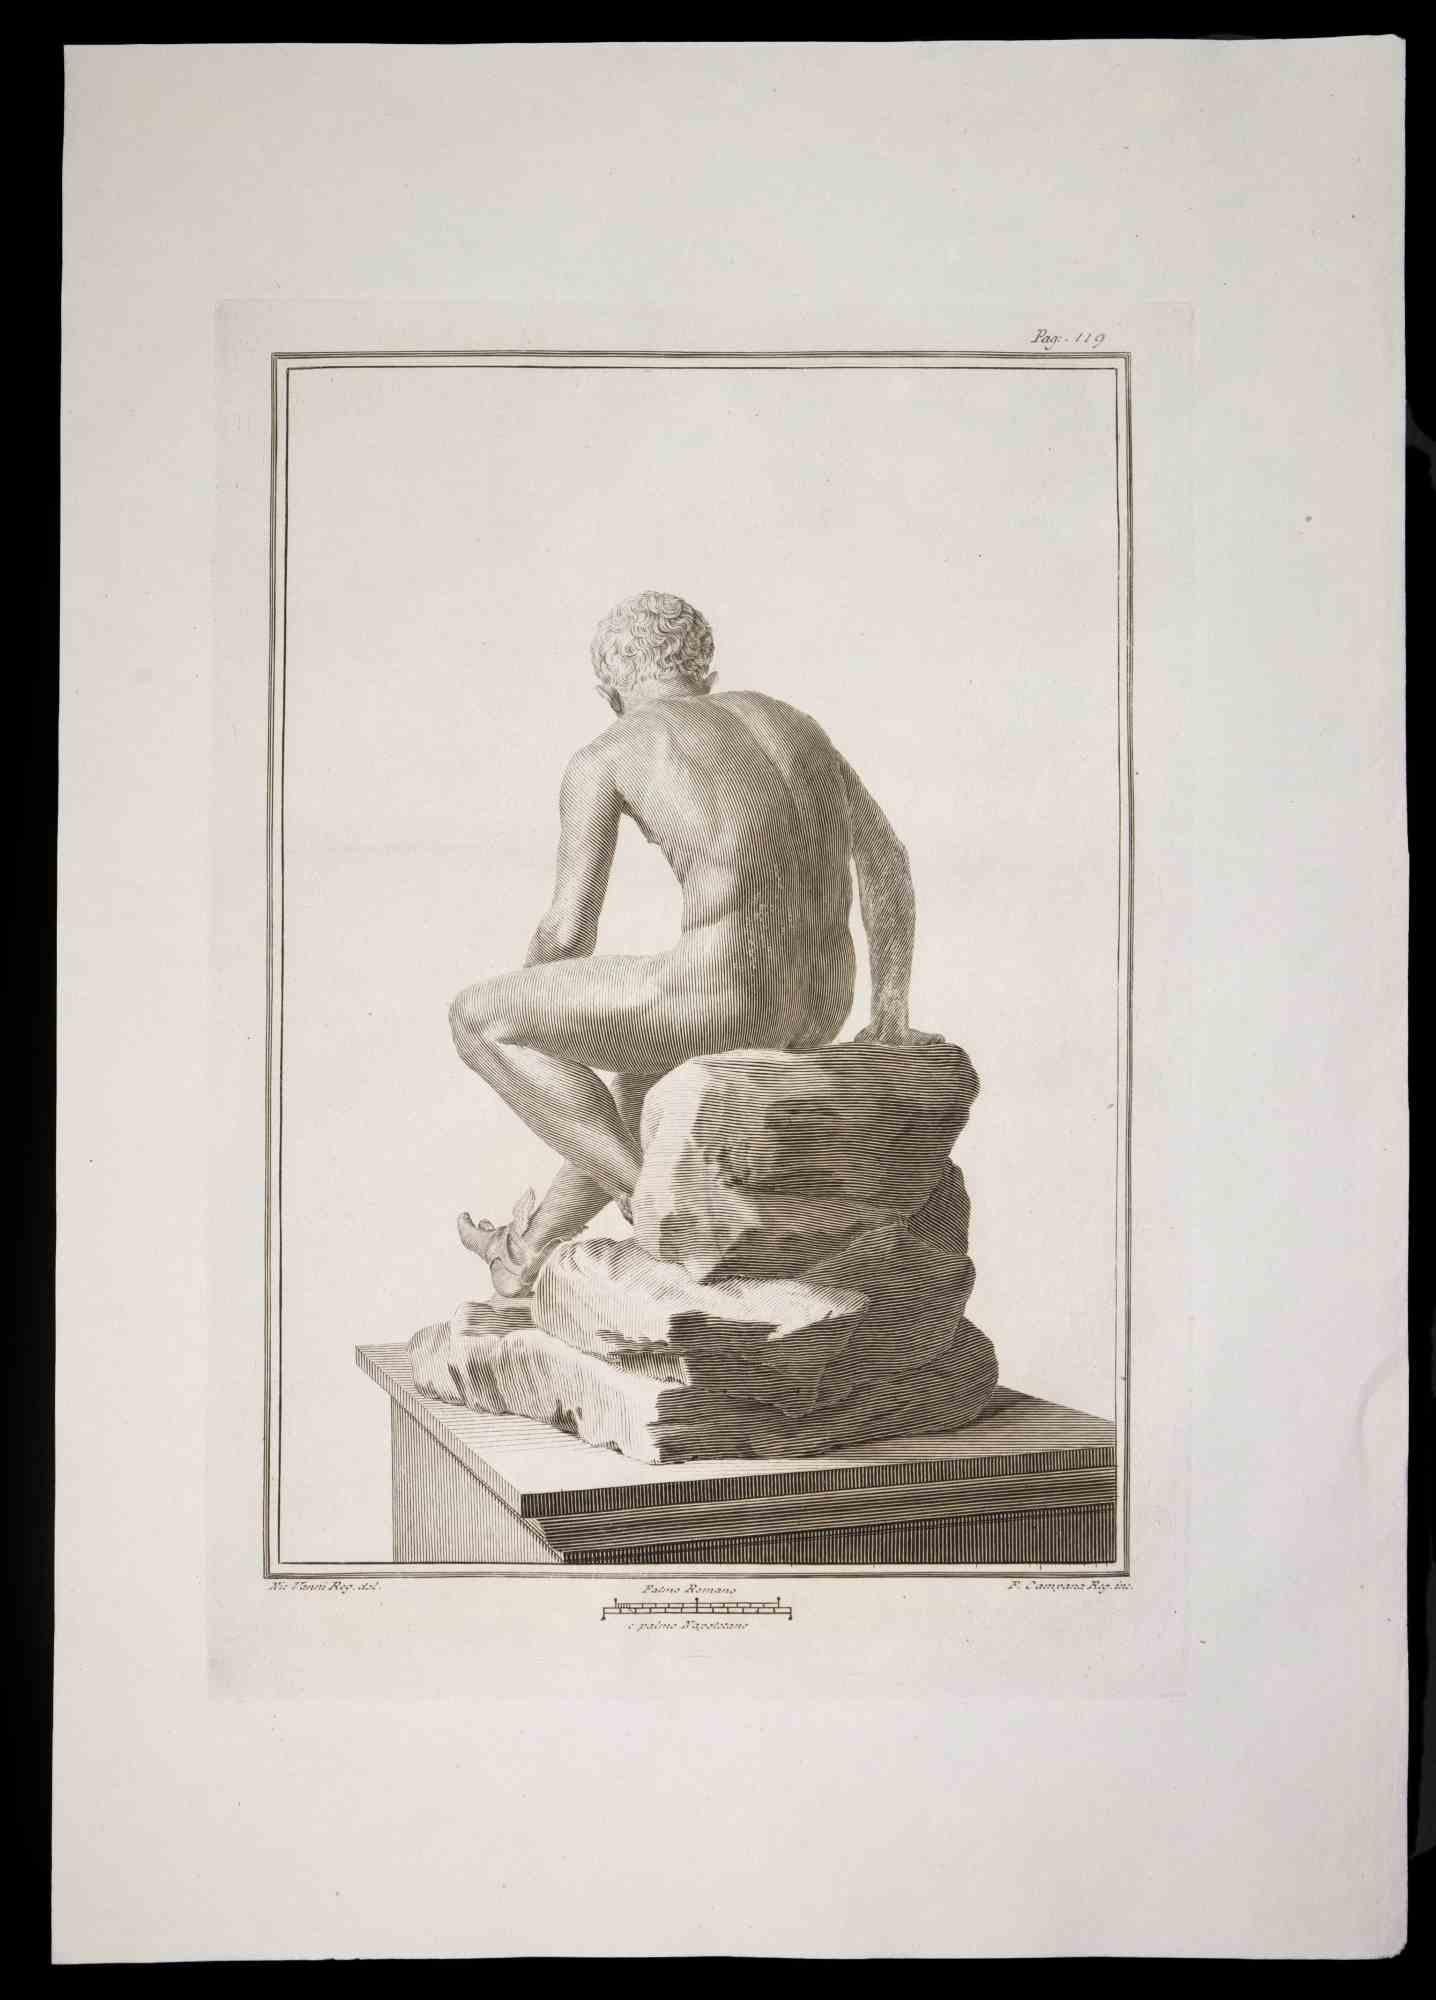 Pietro Campana Figurative Print - Hermes, Ancient Roman Statue - Etching - 18th century